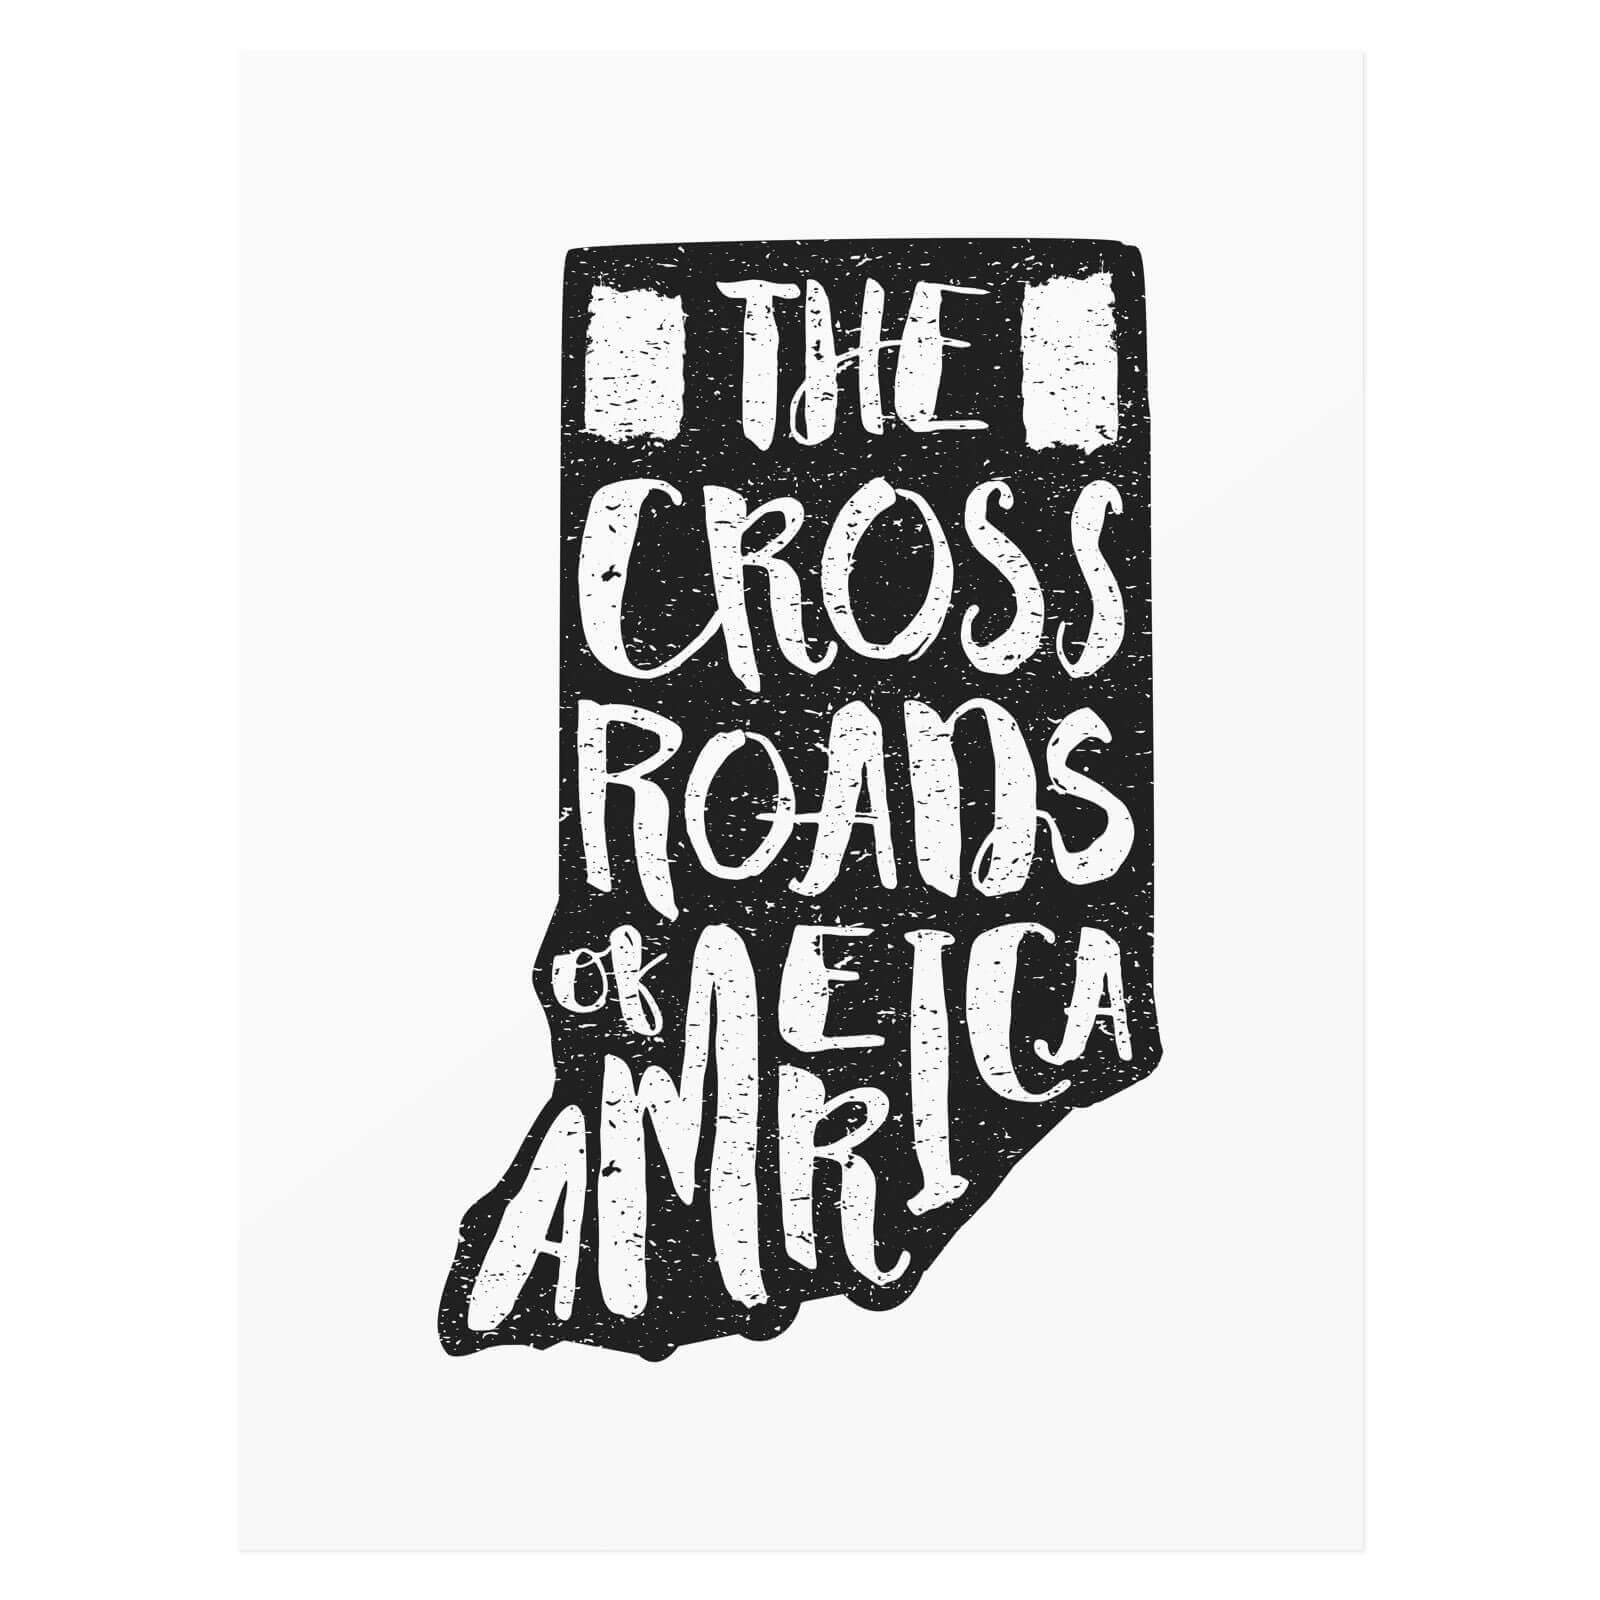 Indiana — The crossroads of America